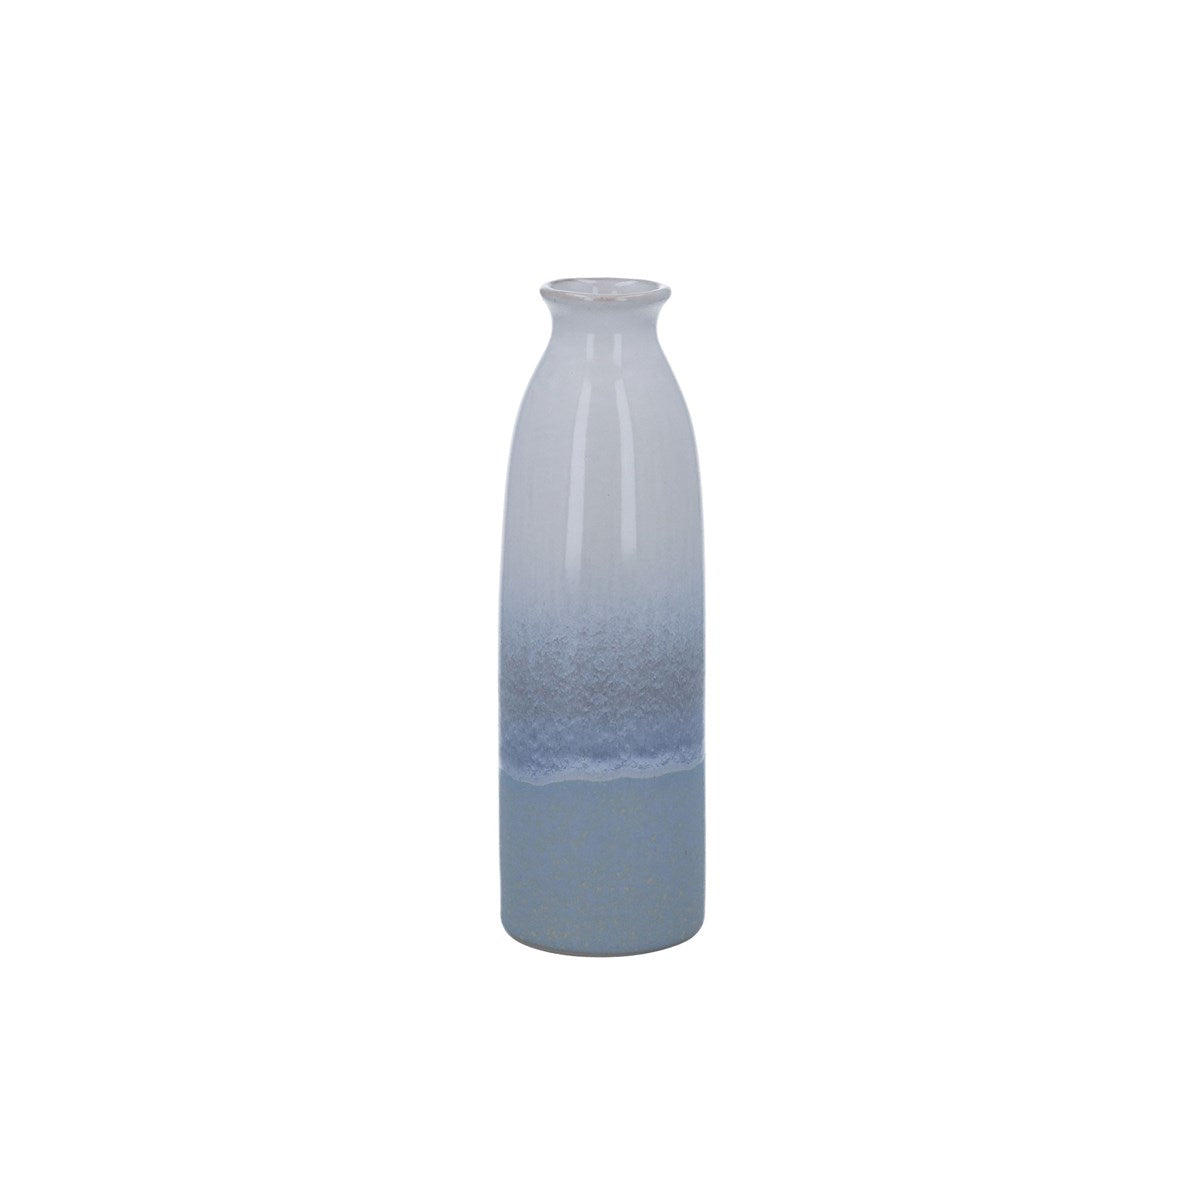 Sea Ceramic Bottle Decorative Vase - Small